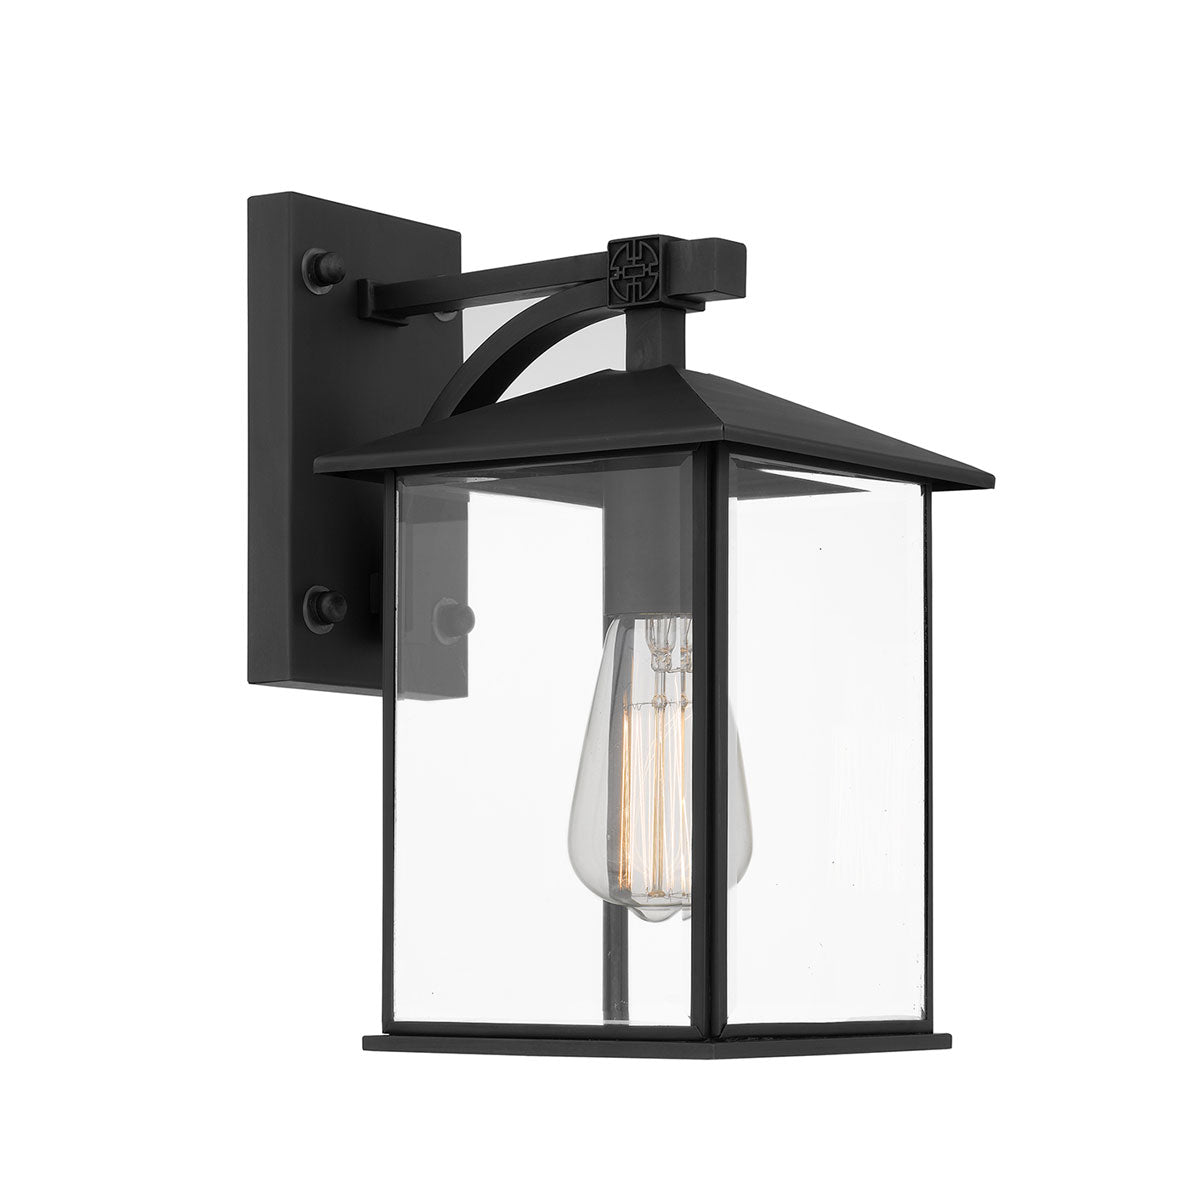 Coby 18cm Black Open Glass Box Lantern Coach Light